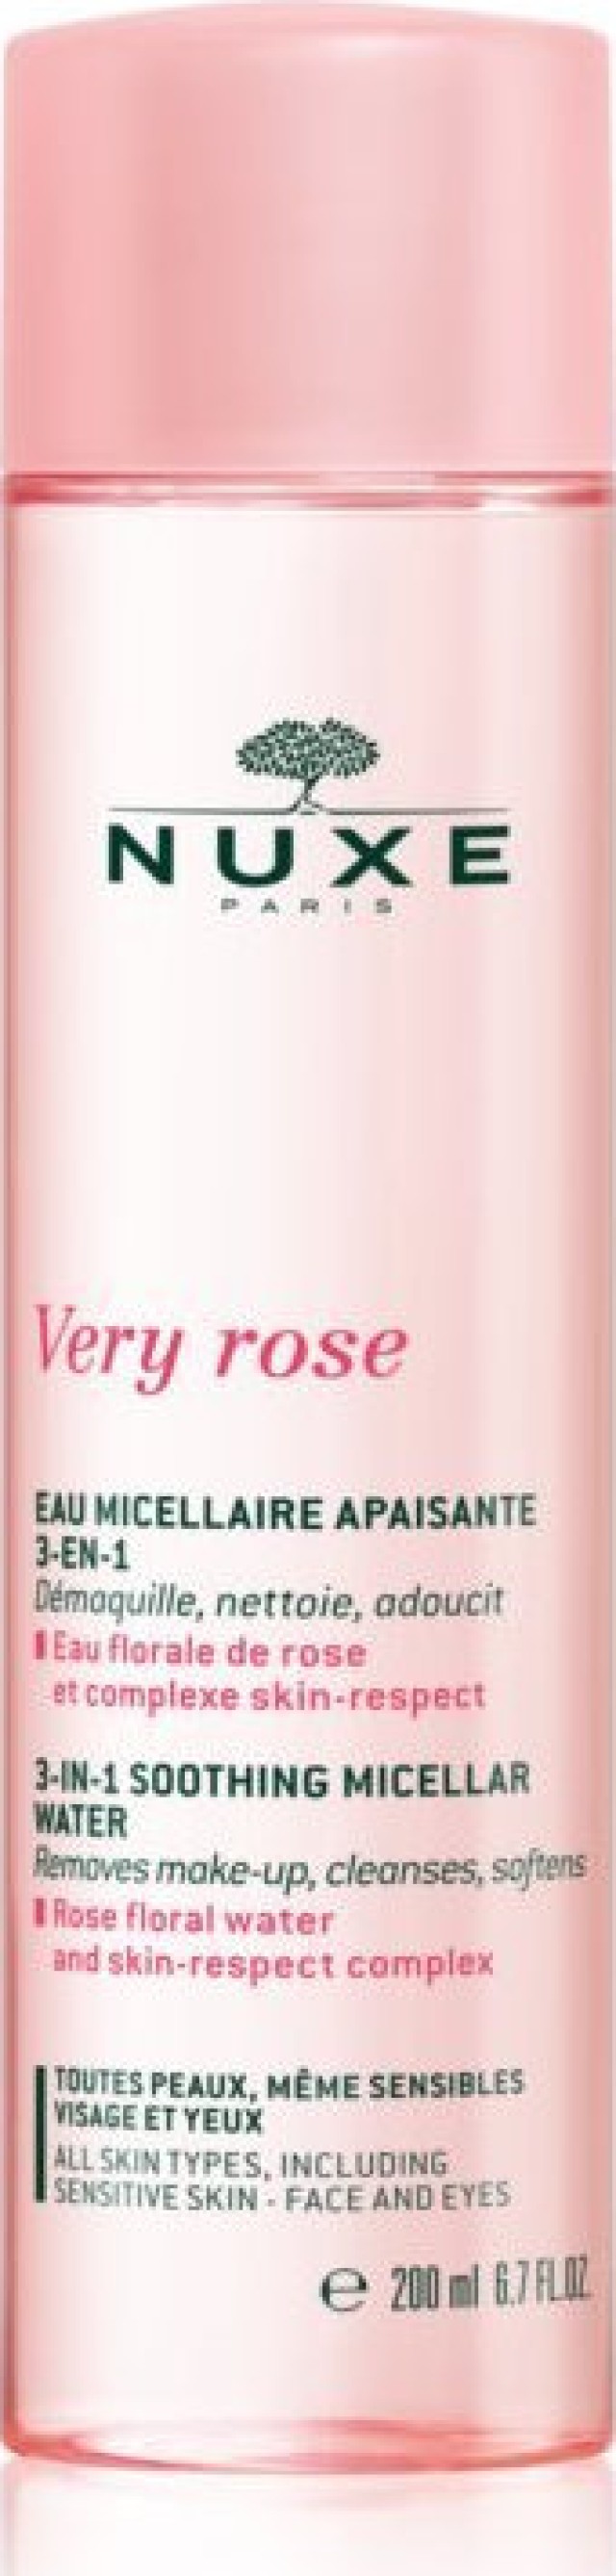 Nuxe - Very Rose Micellar Water 200ml